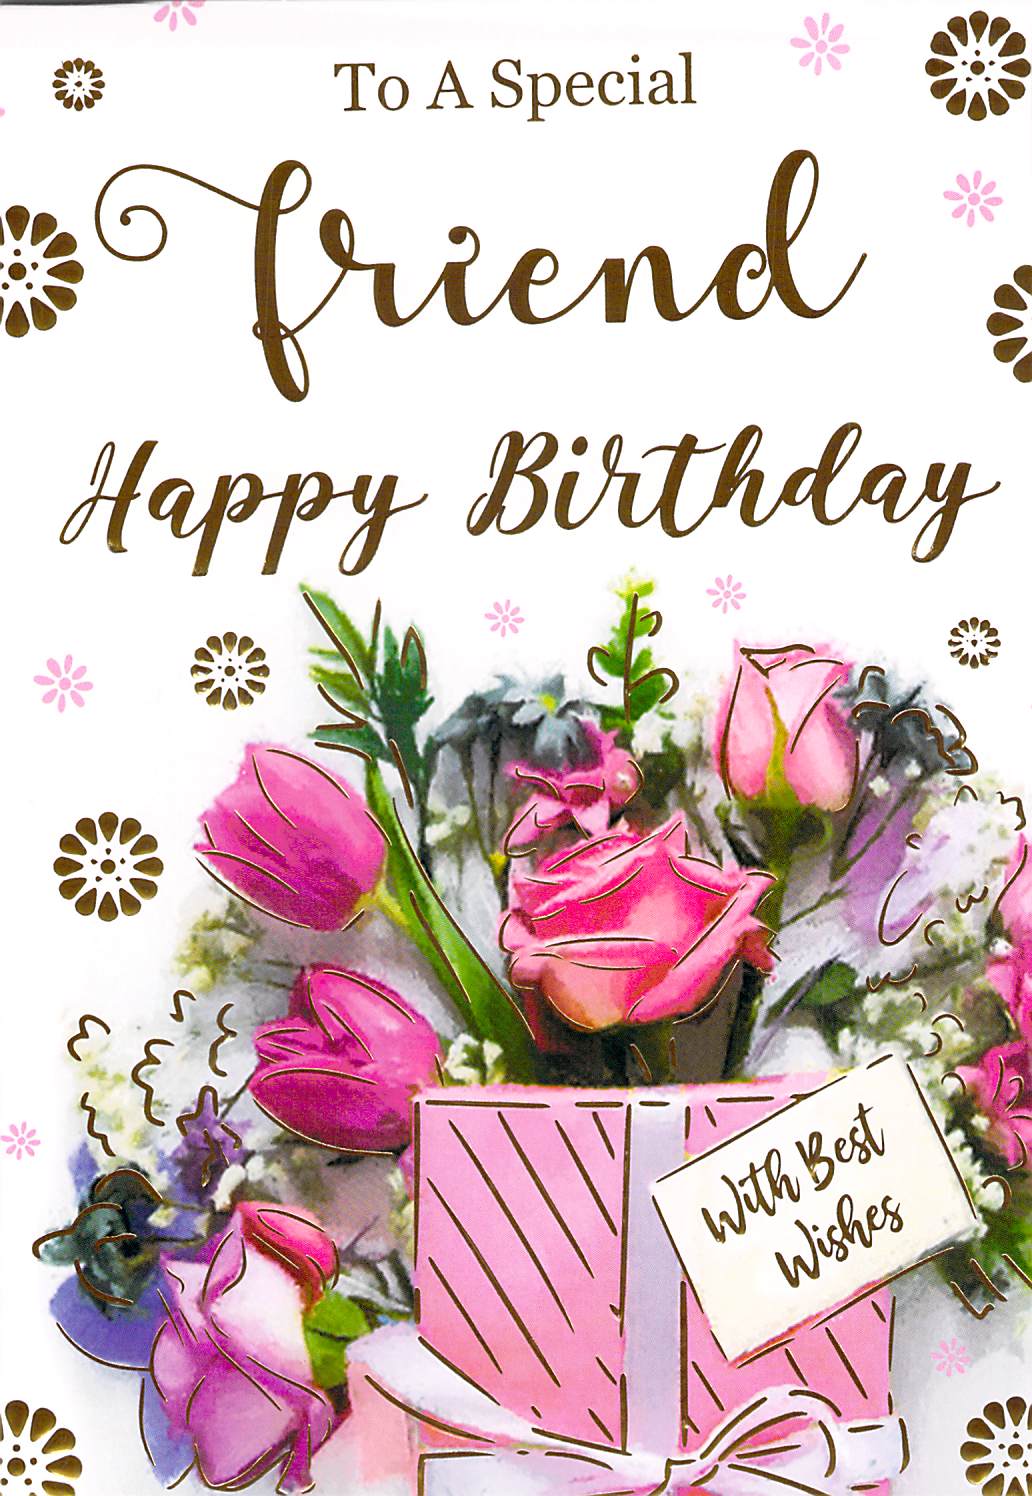 Friend - Birthday Greeting Card - Flowers  - Multi Buy Discount